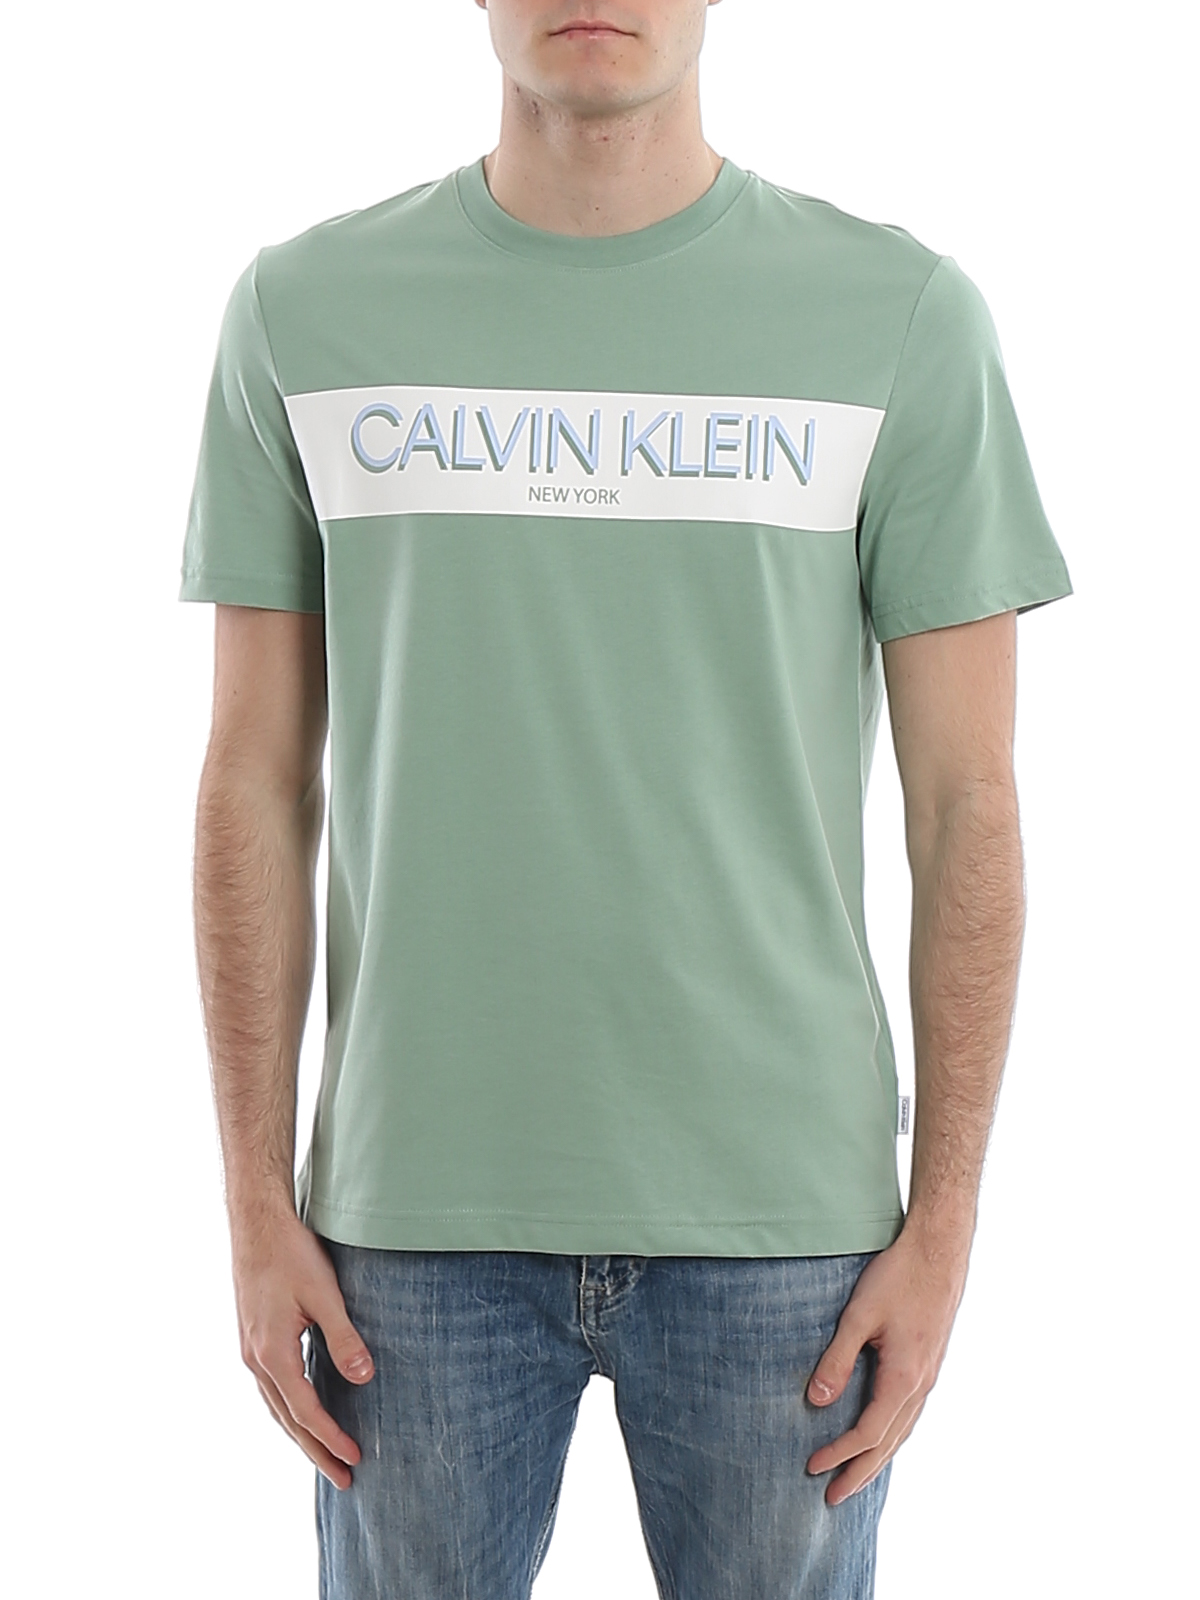 calvin klein shirts logo